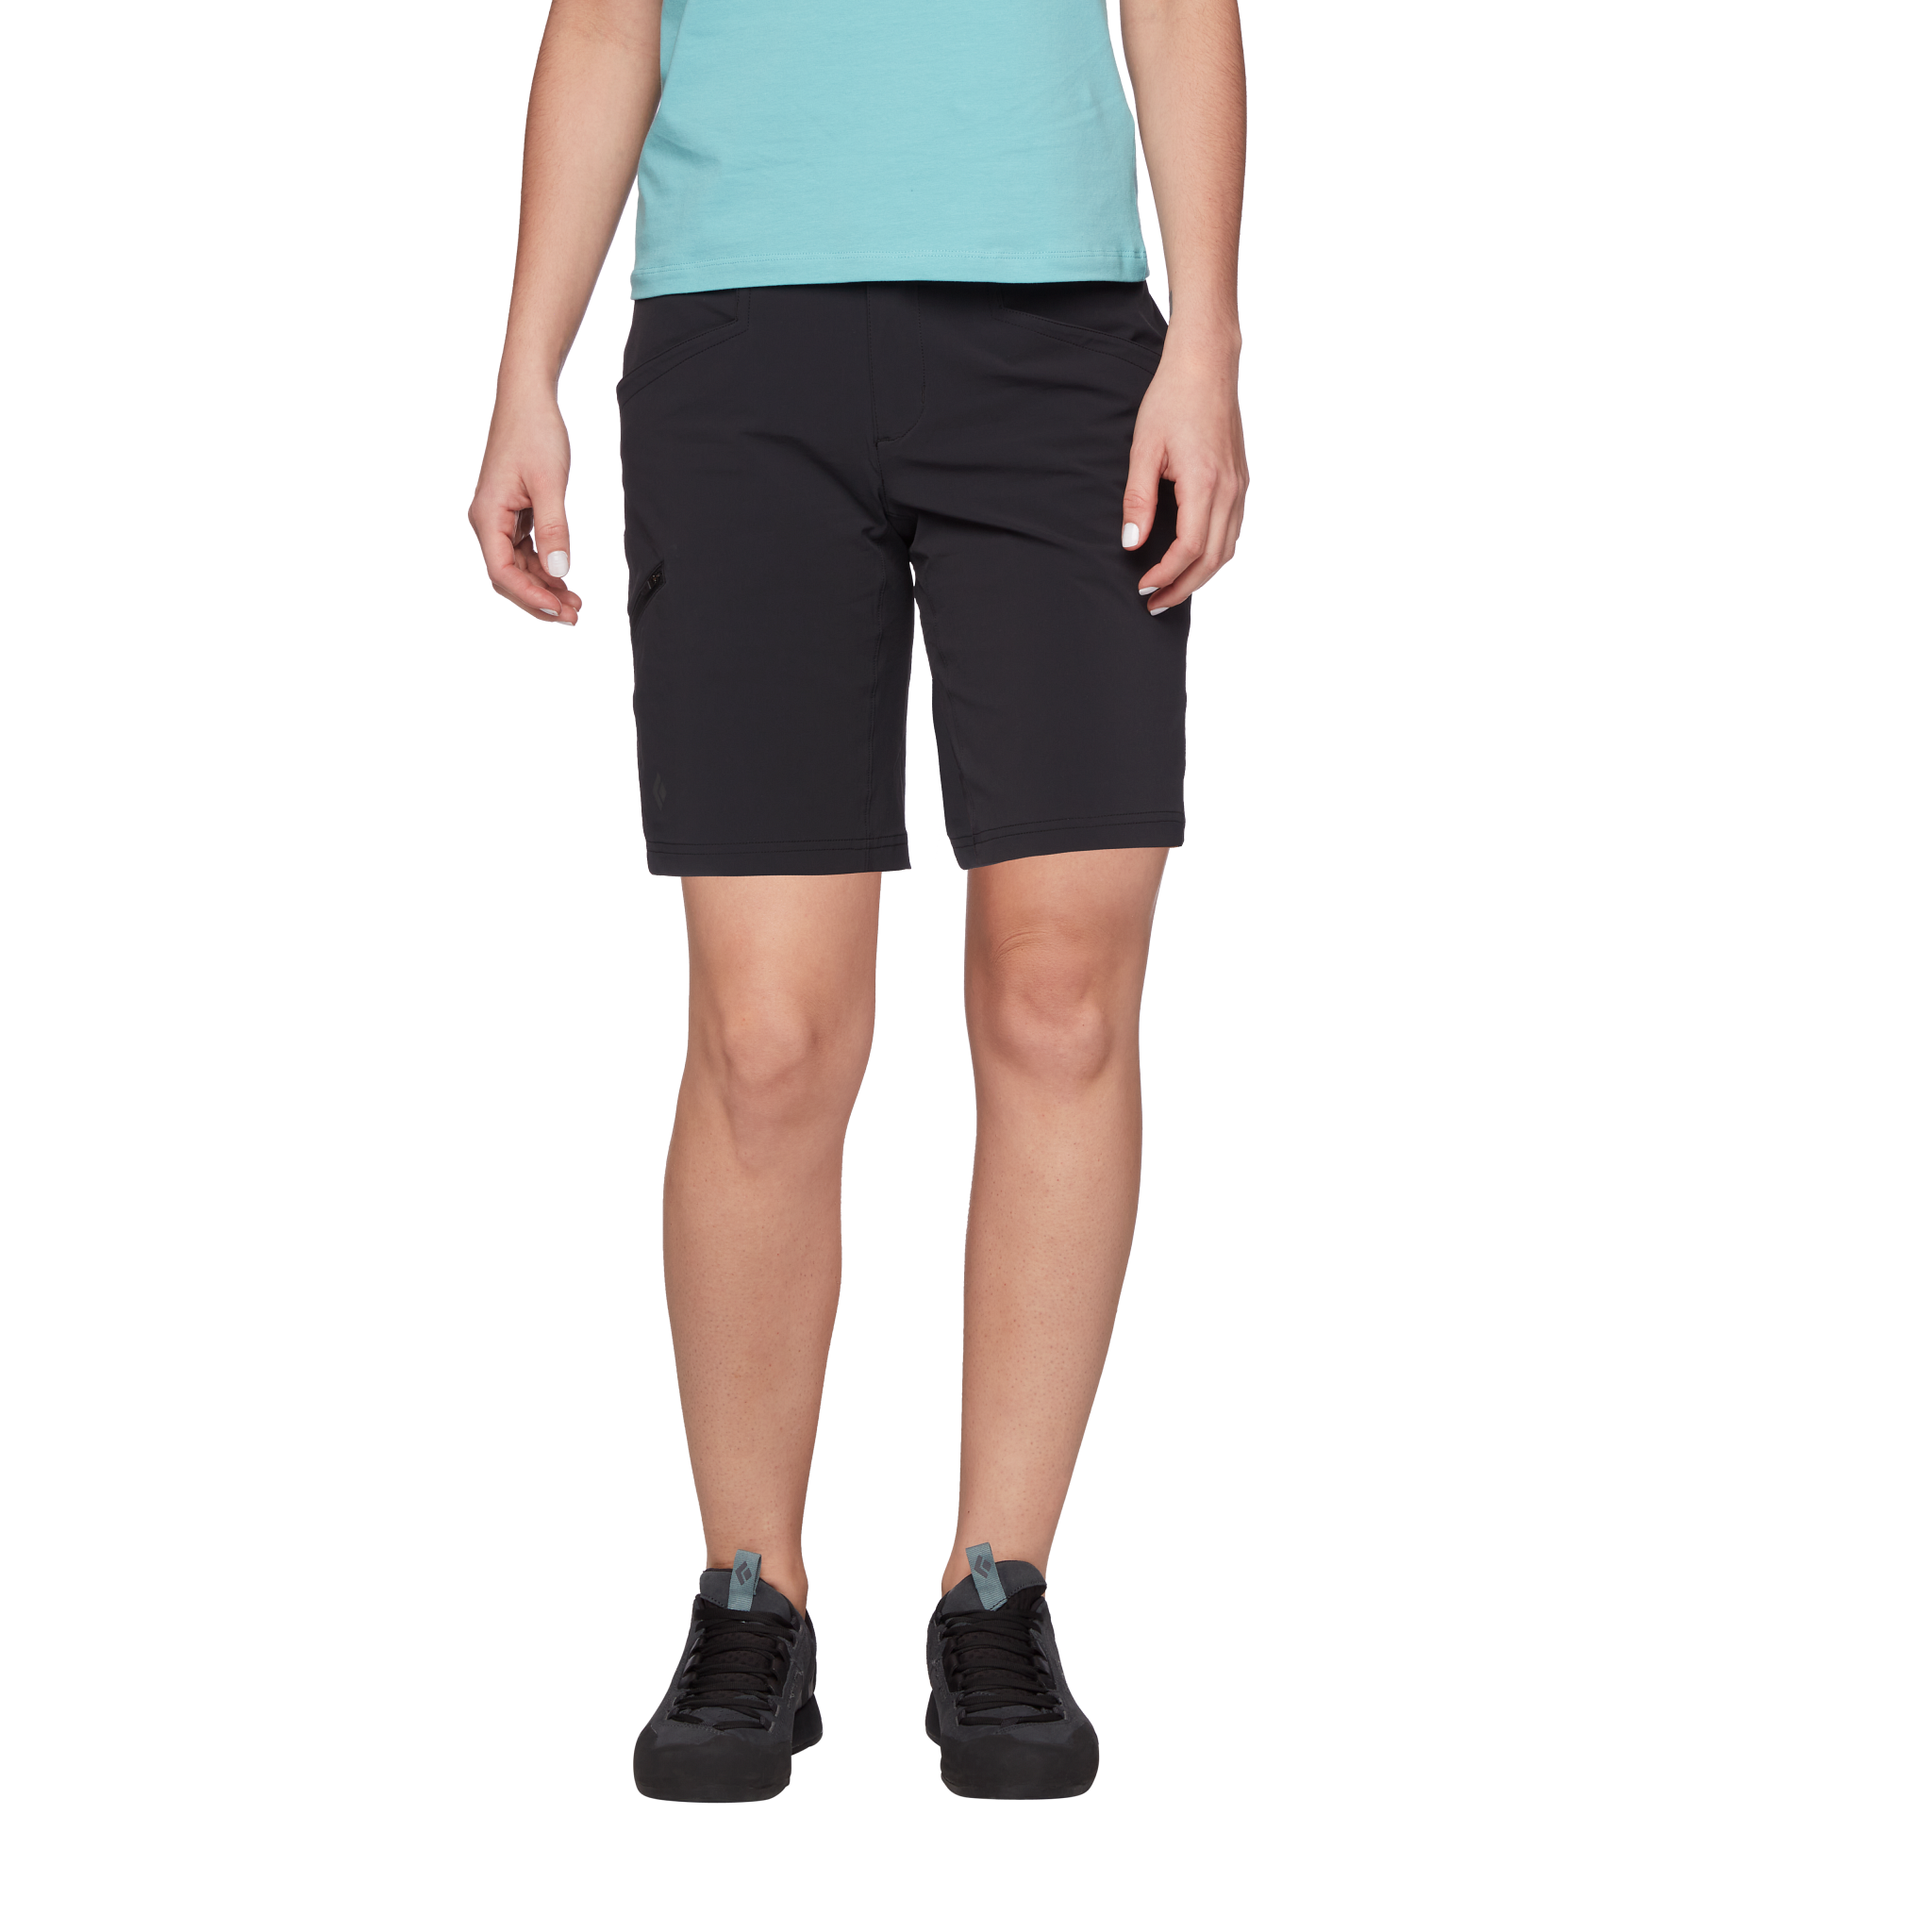 Black Diamond Equipment Women's Valley Shorts Size 8, in Black